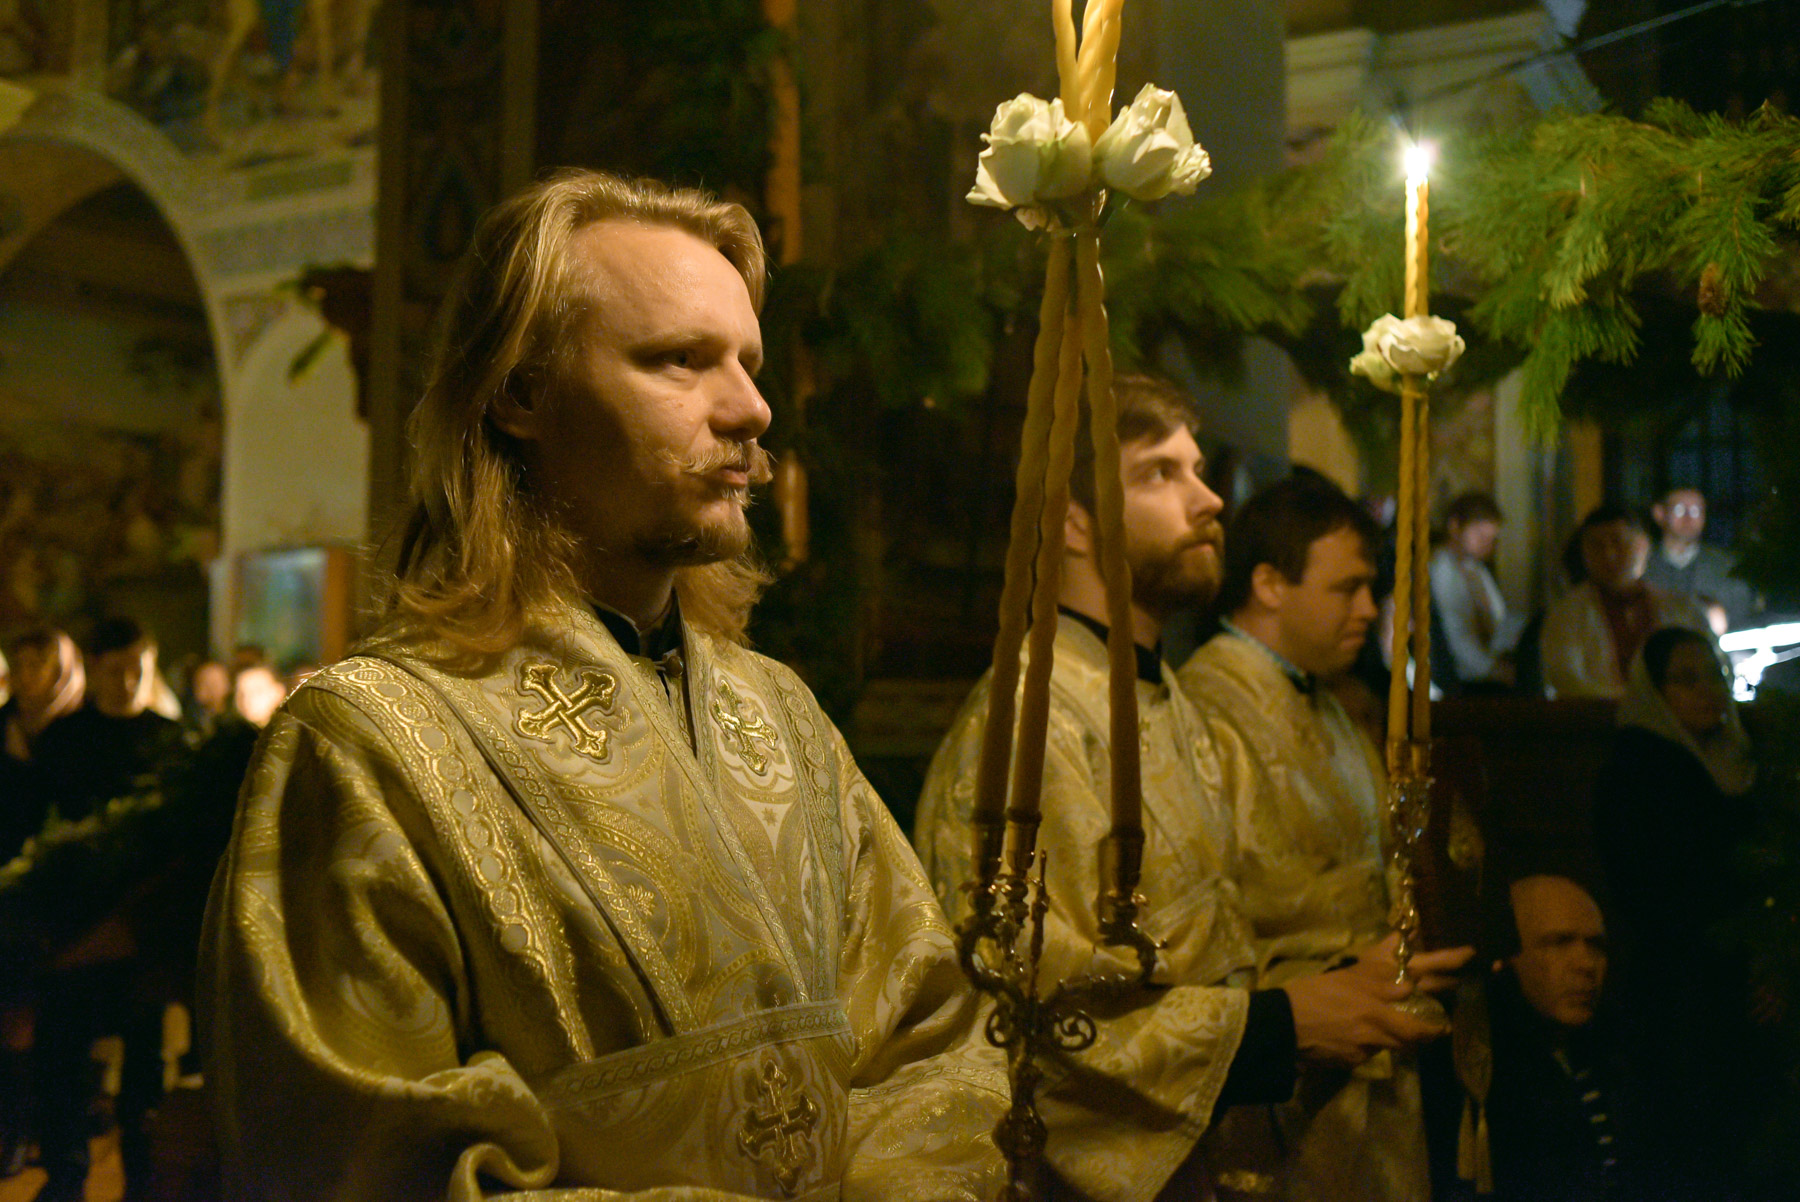 photos of orthodox christmas 0074